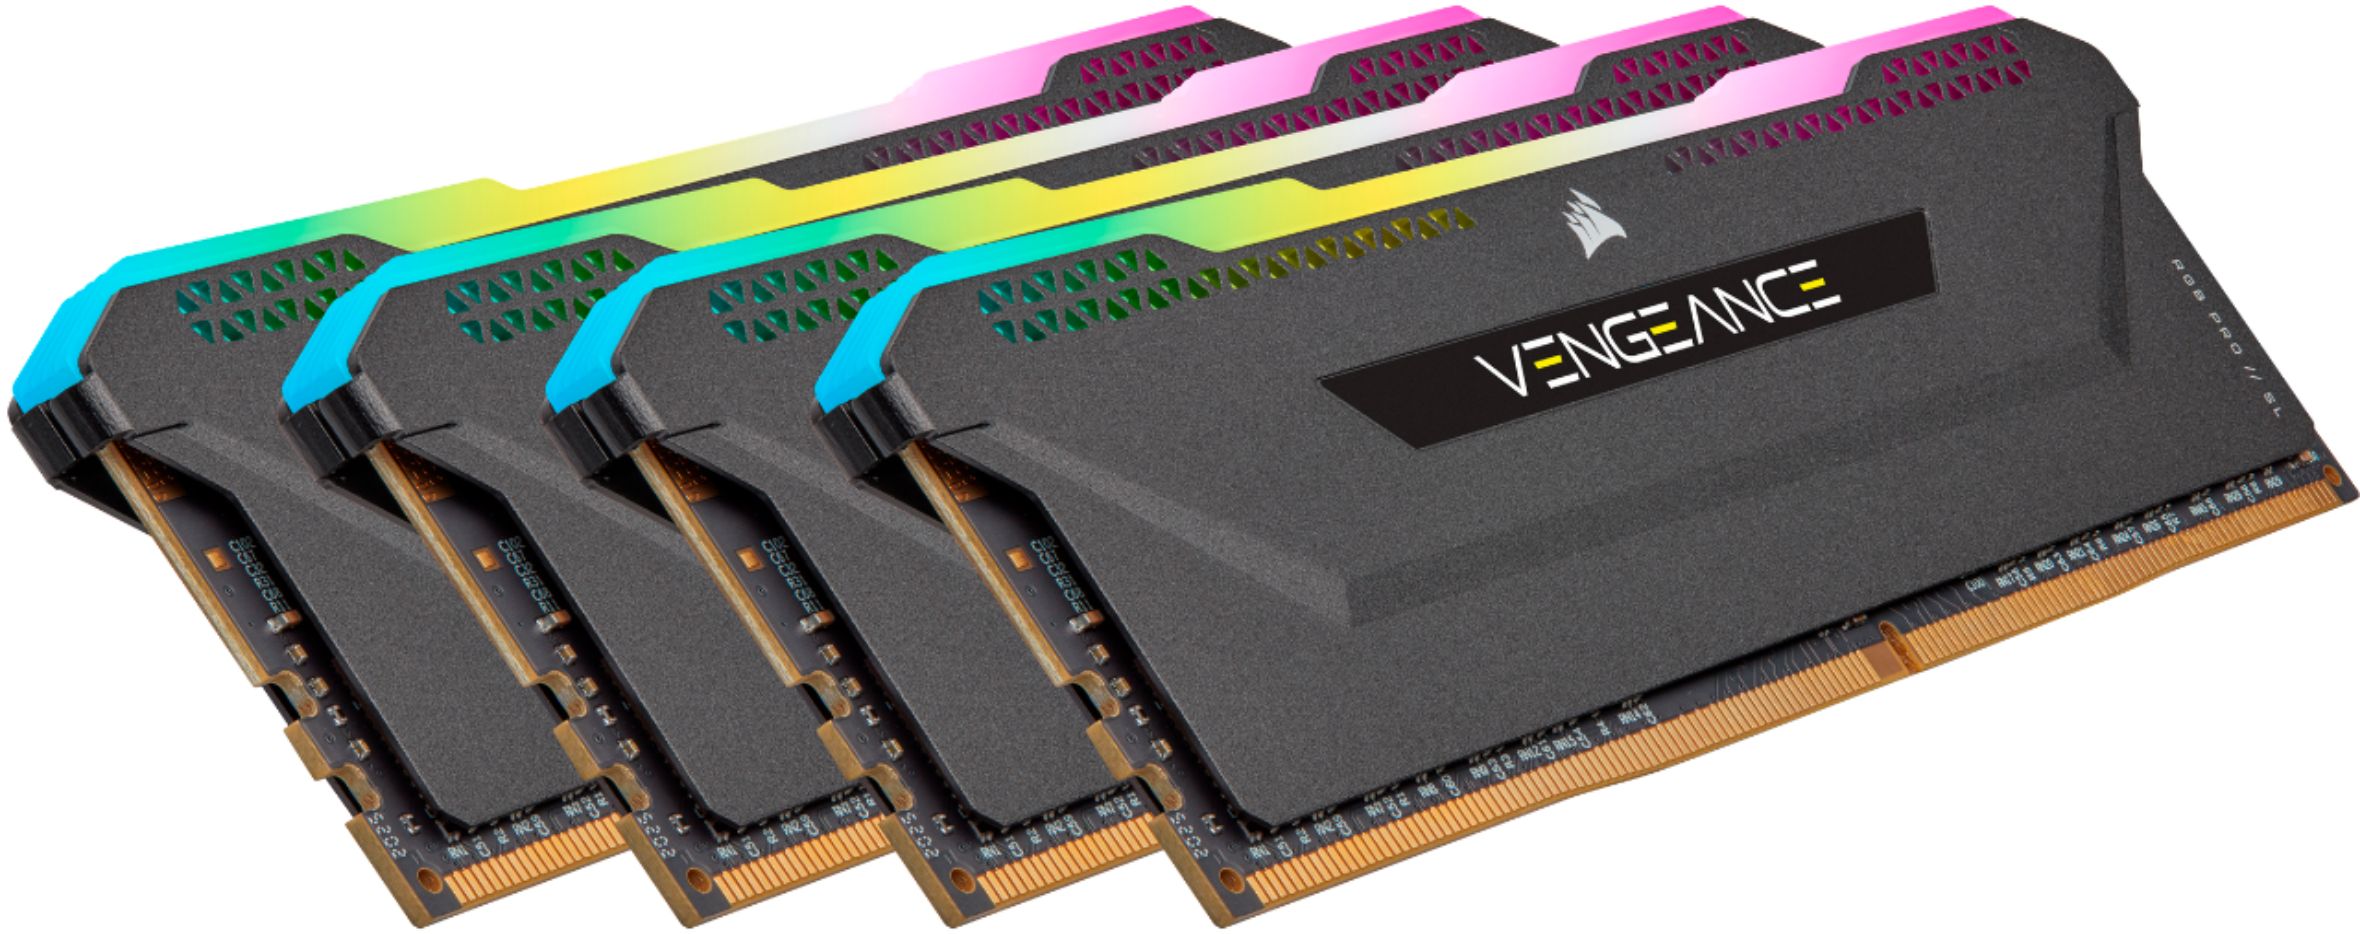 CORSAIR VENGEANCE RGB PRO SL (2PK x 8GB) 3600MHz DDR4 C18 DIMM Desktop Memory CMH16GX4M2D3600C18 - Best Buy